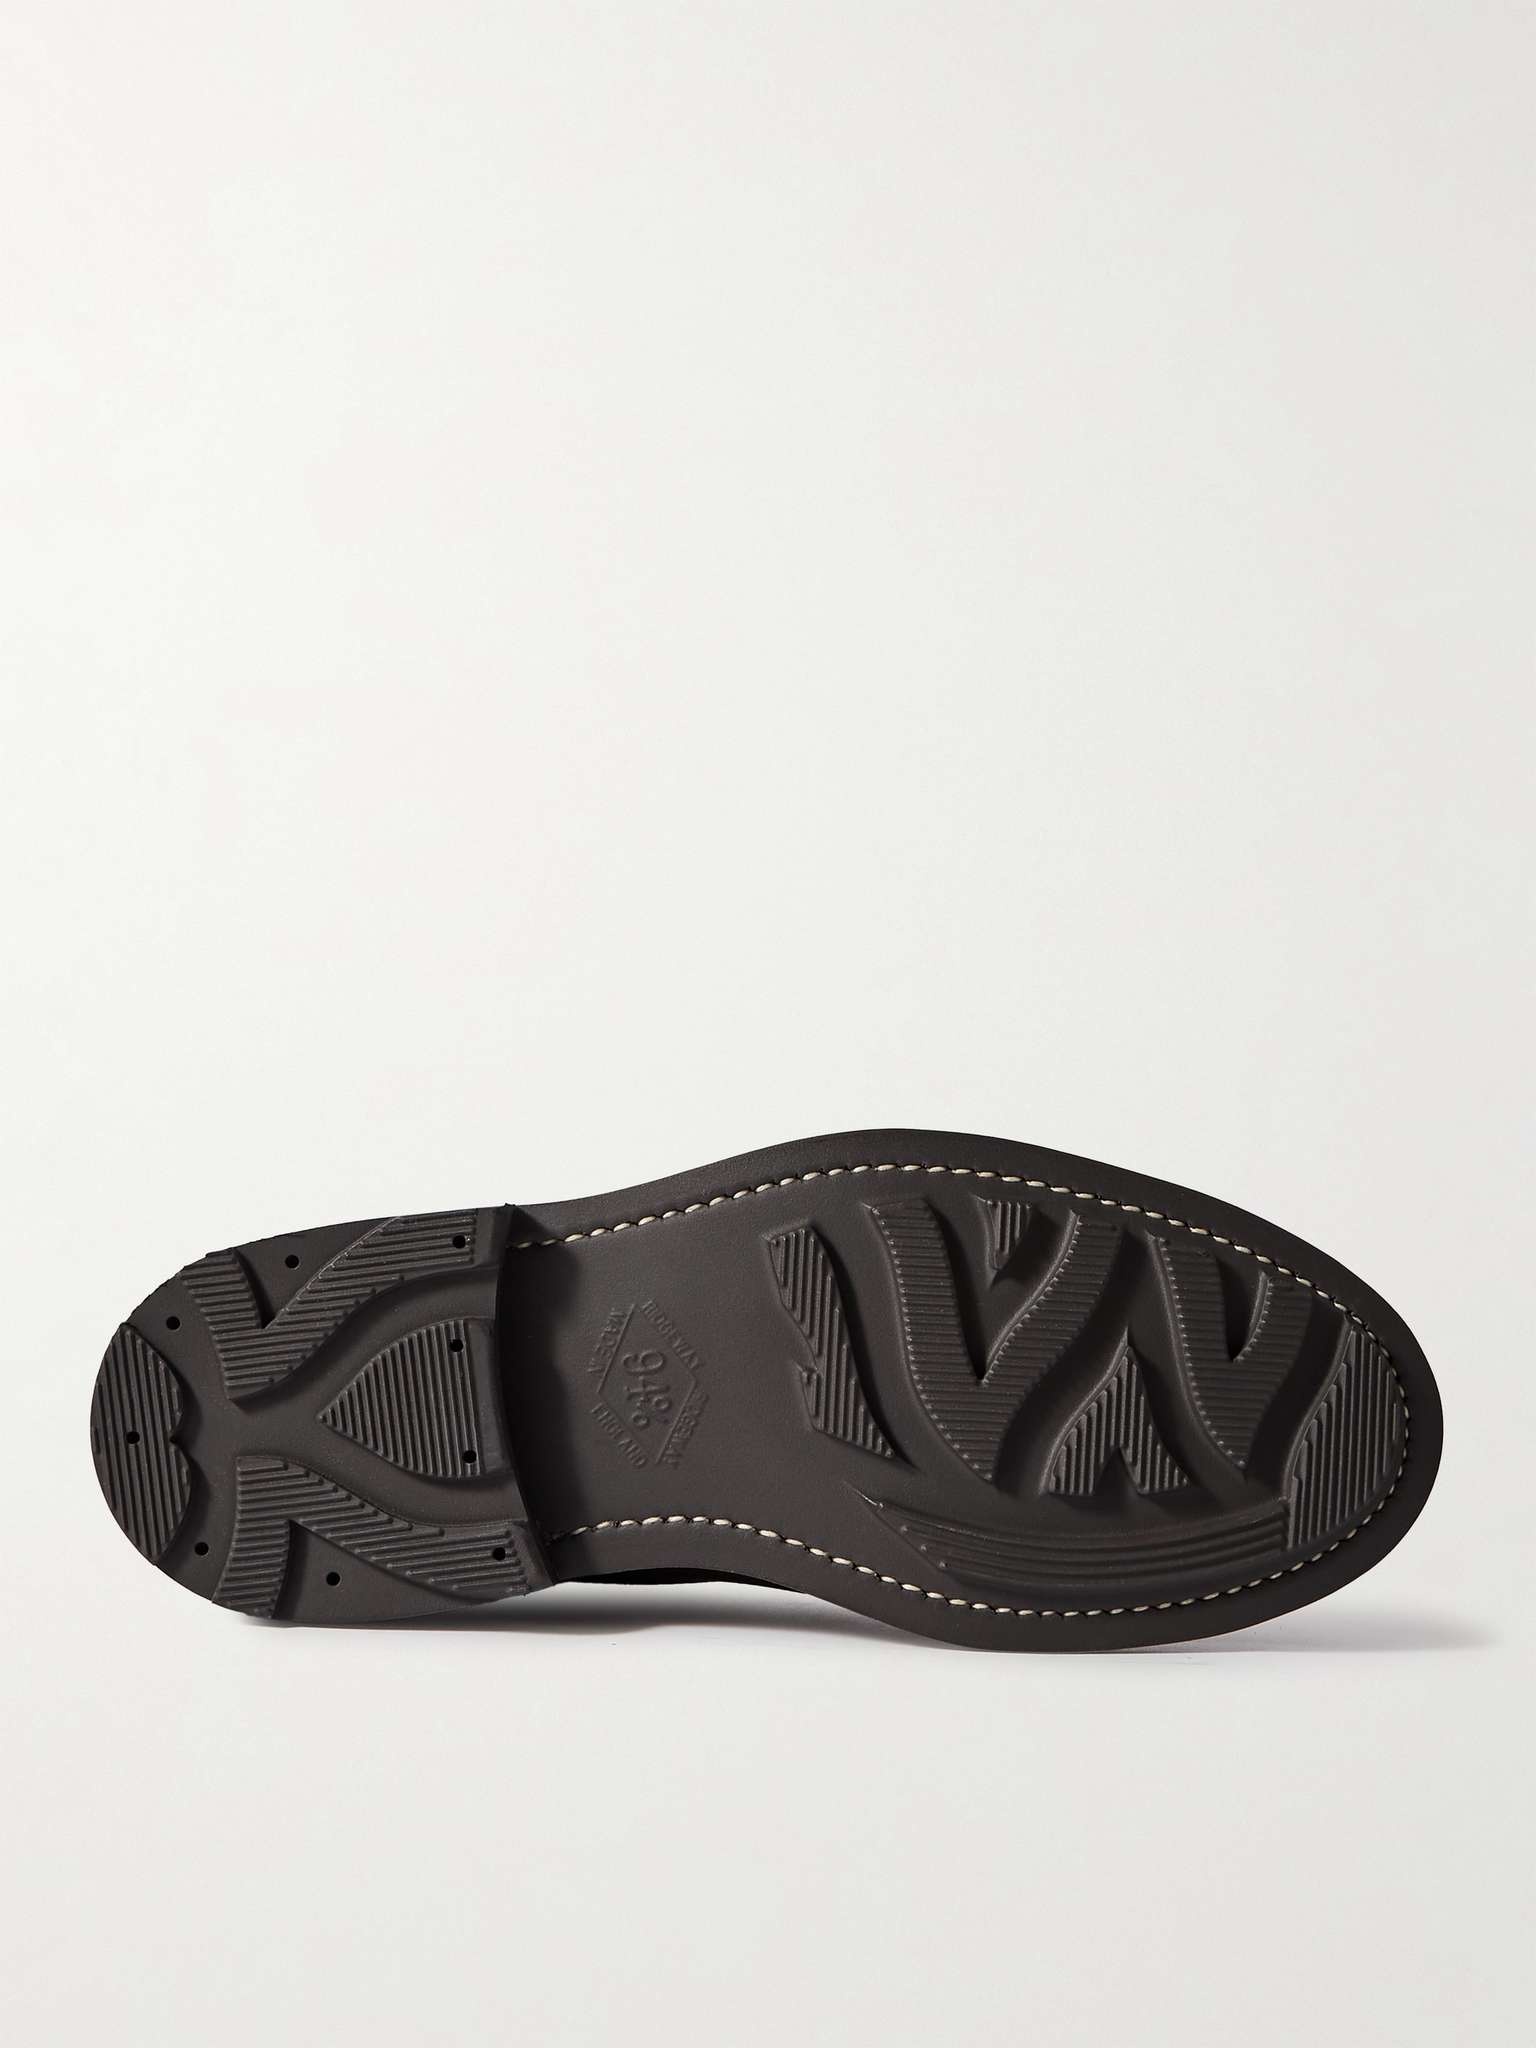 Grassmere Scotchgrain Leather Boots - 6